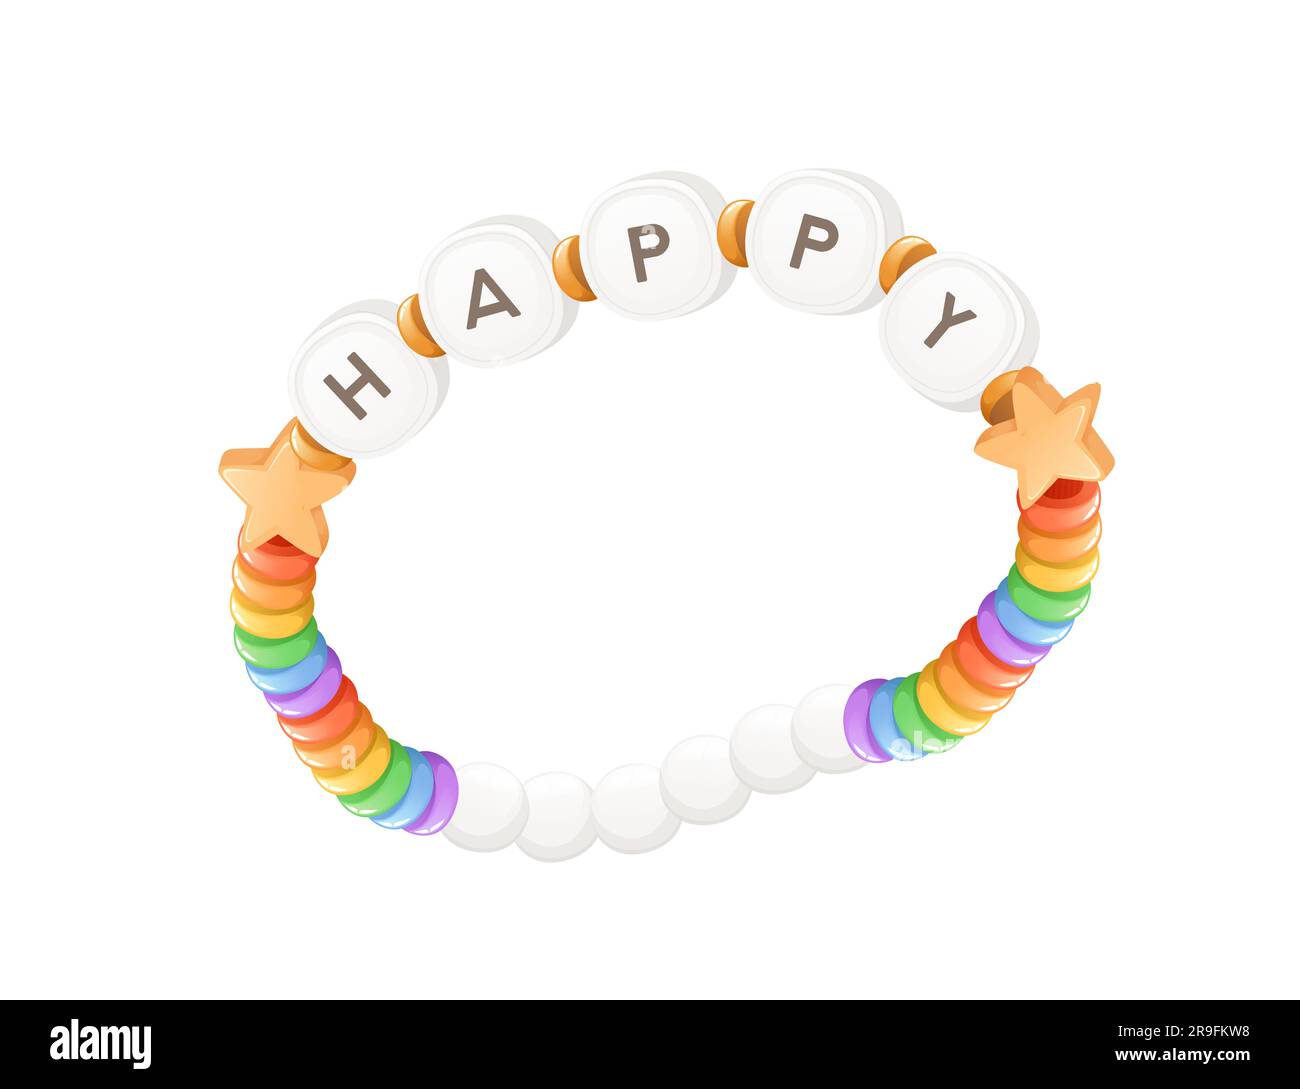 Handmade plastic bead bracelets friendship Vector Image